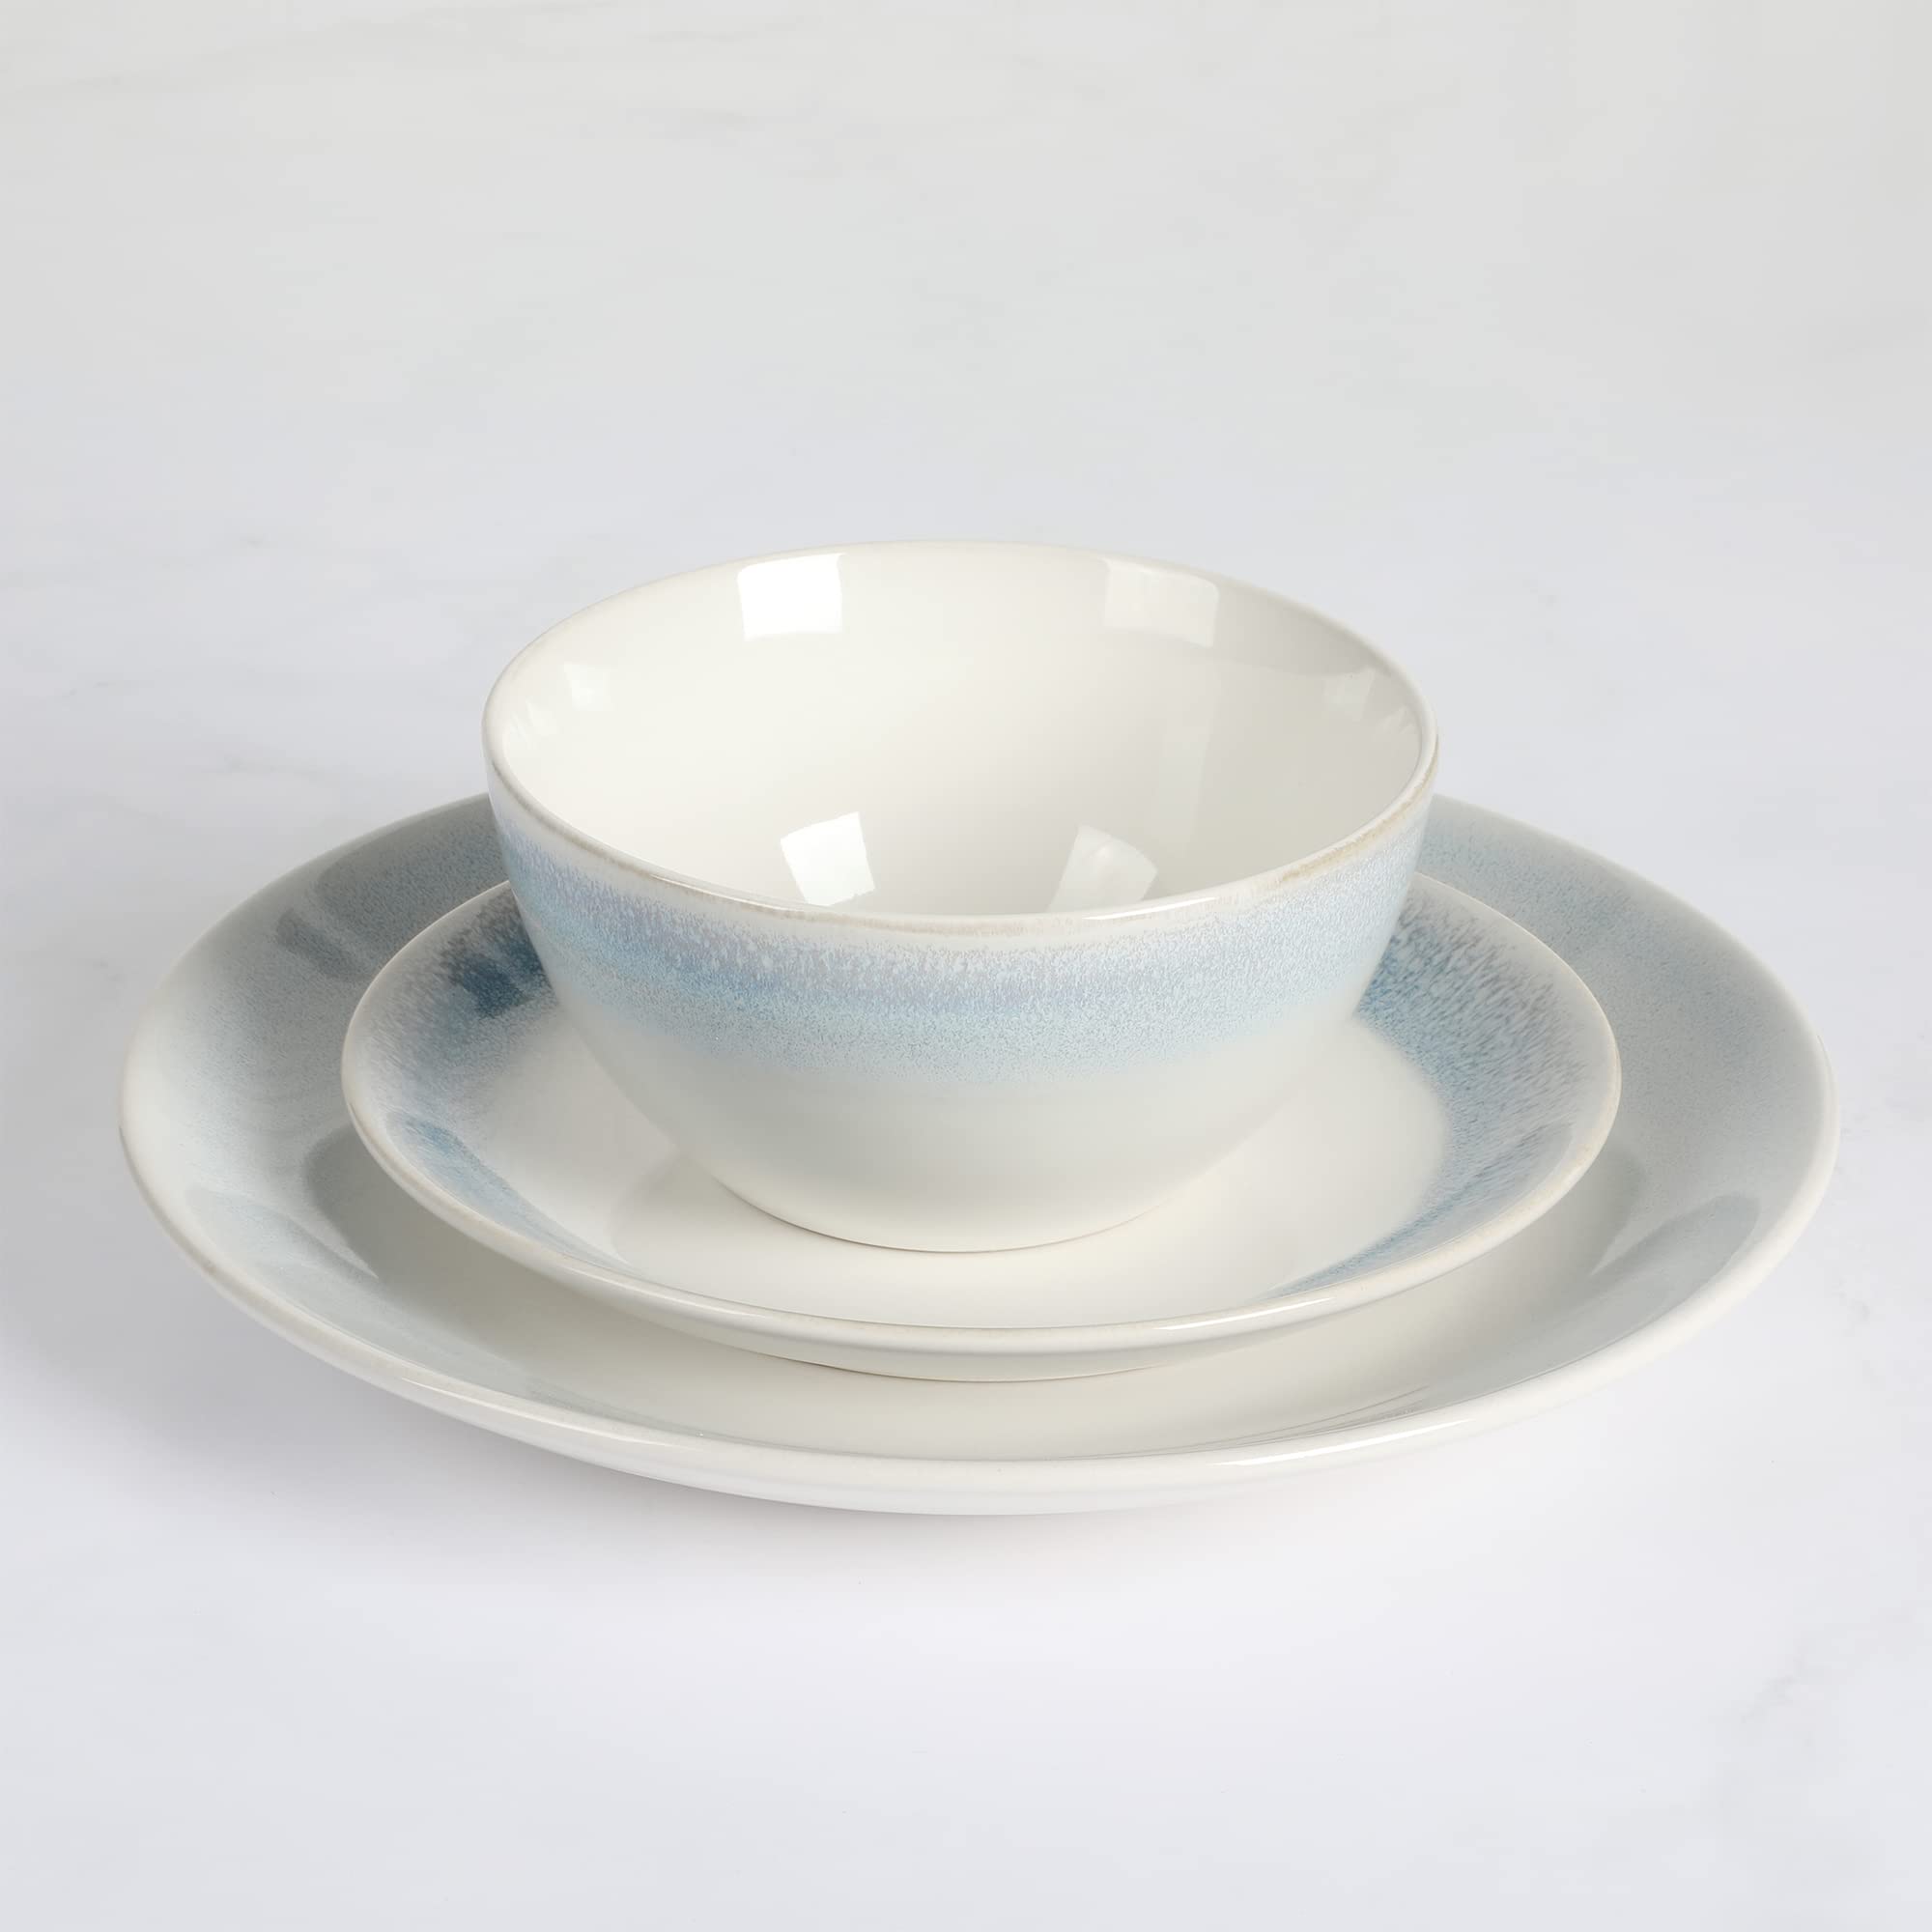 Martha Stewart Perry Street Stoneware Reactive Dinnerware Set - White w/Blue Rim, Service for 4 (12pcs)